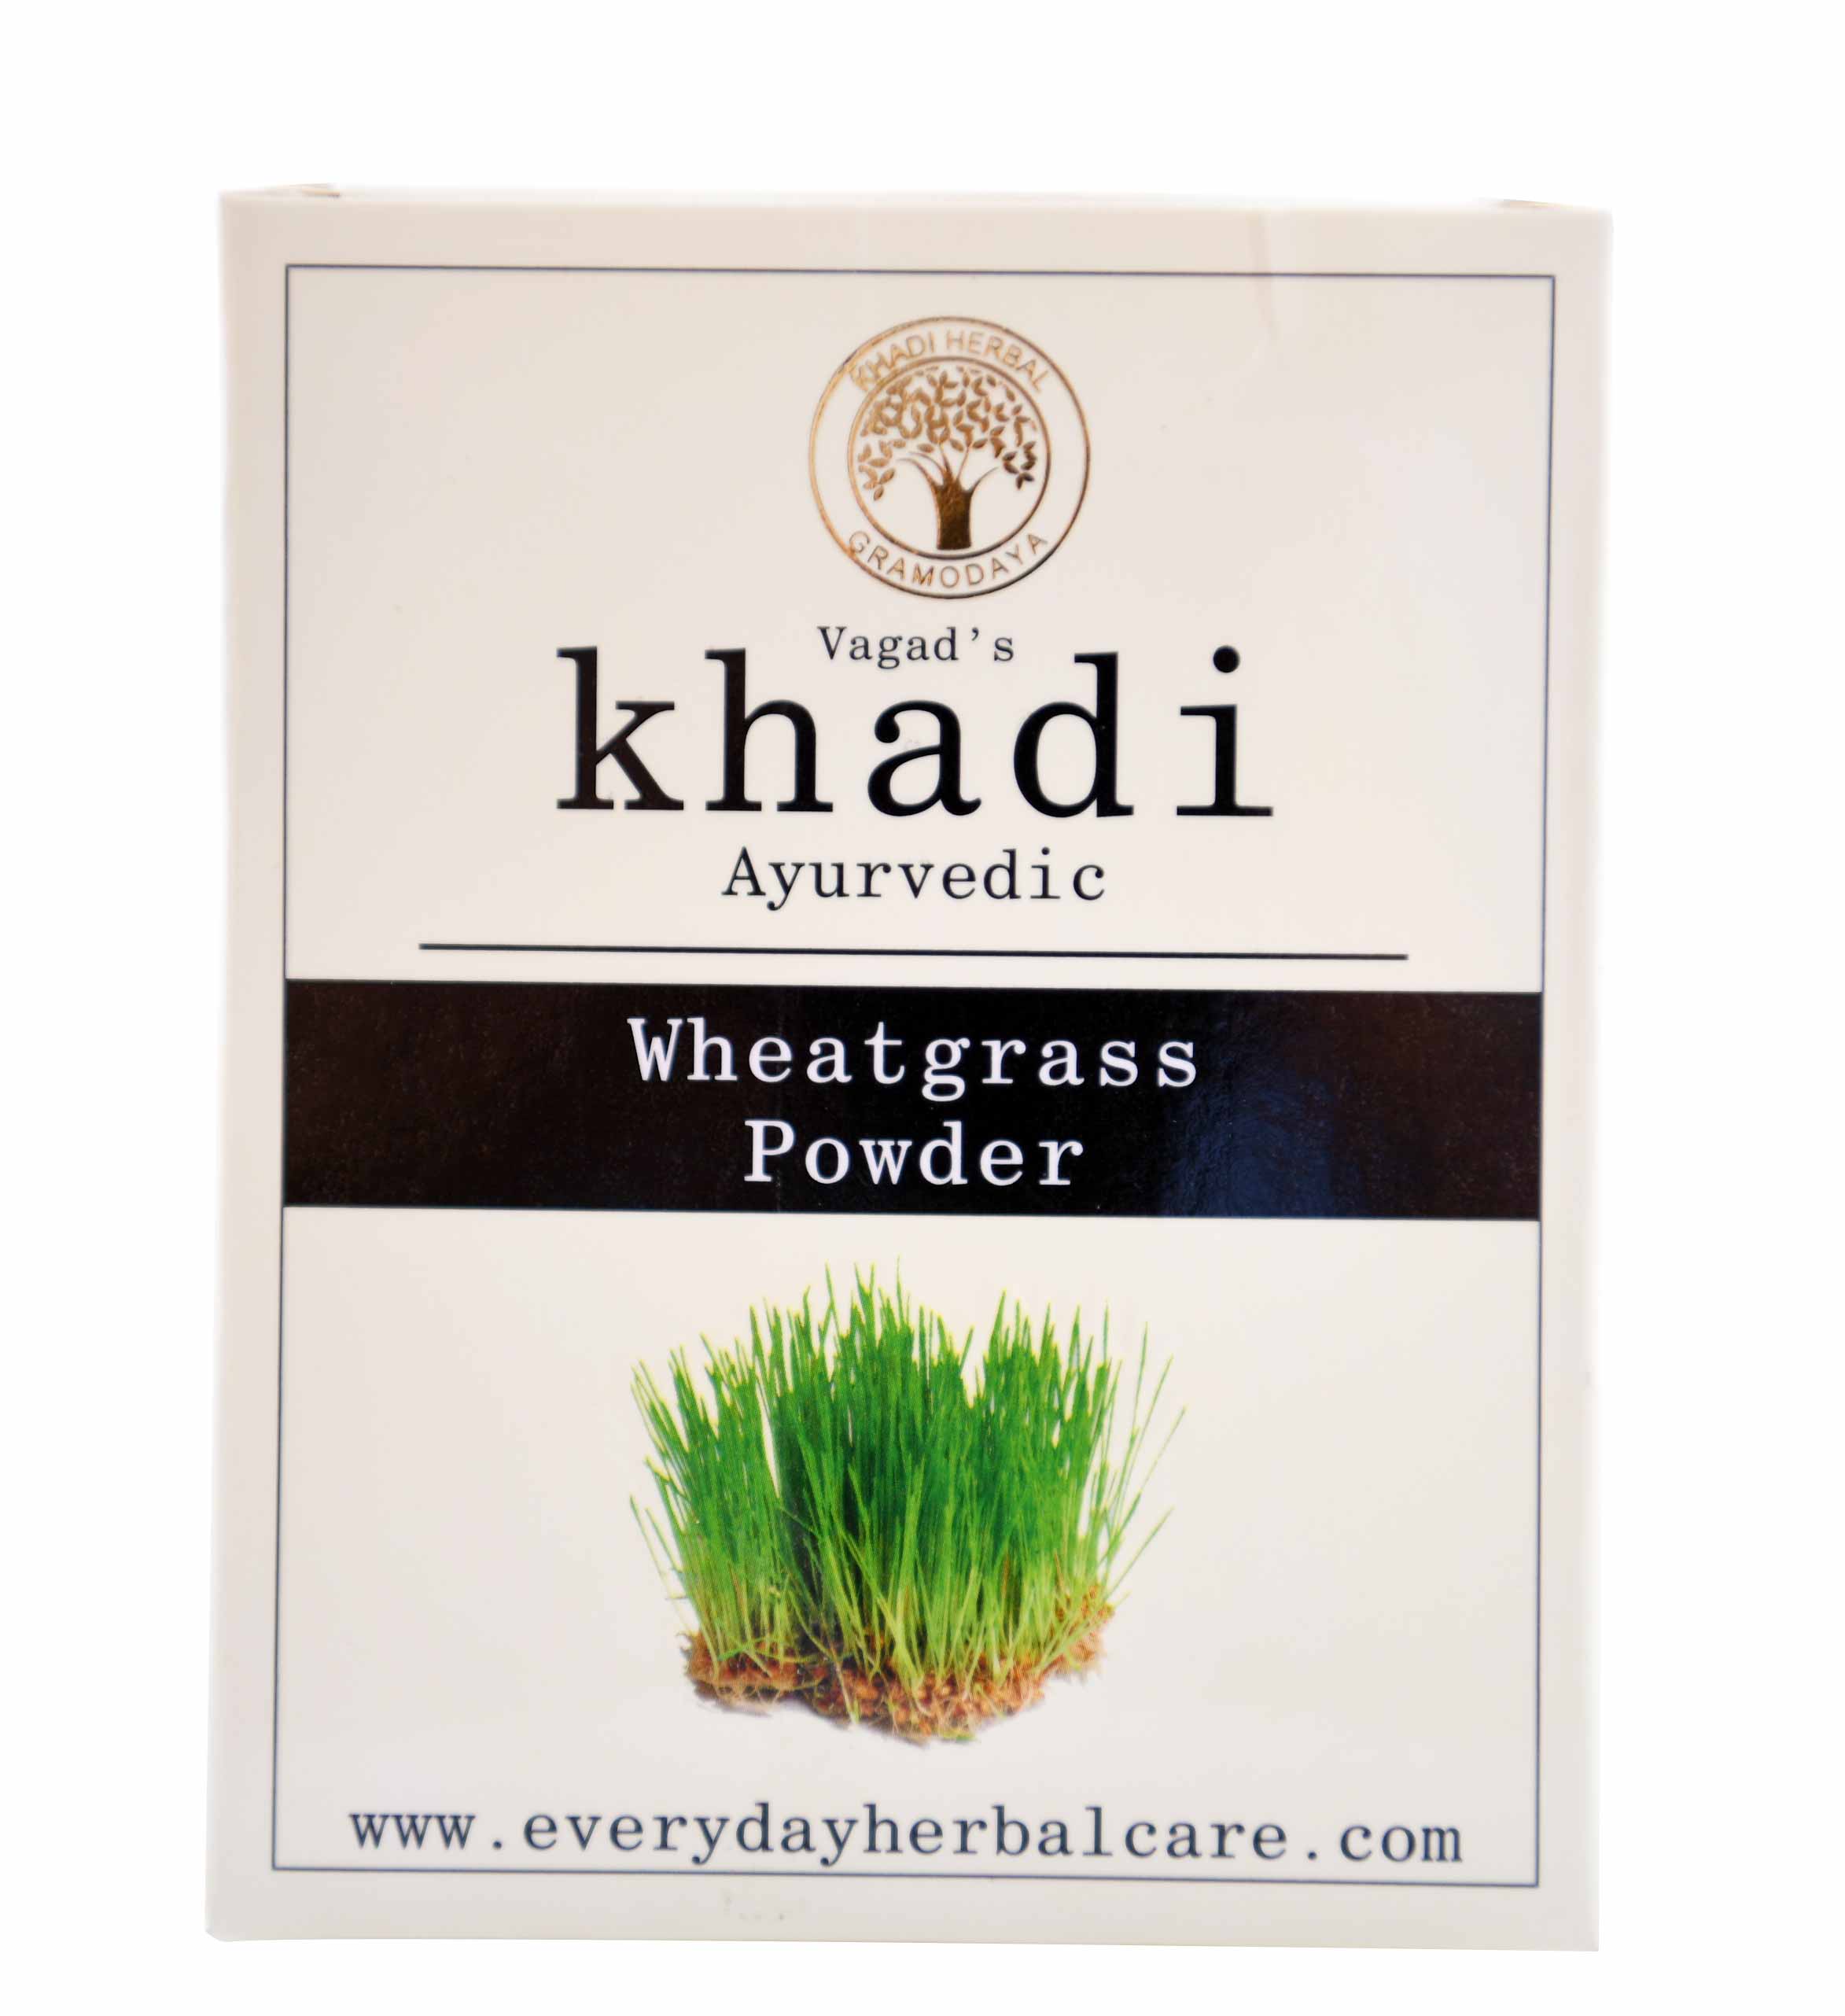 Vagad's Khadi Wheat Grass Powder